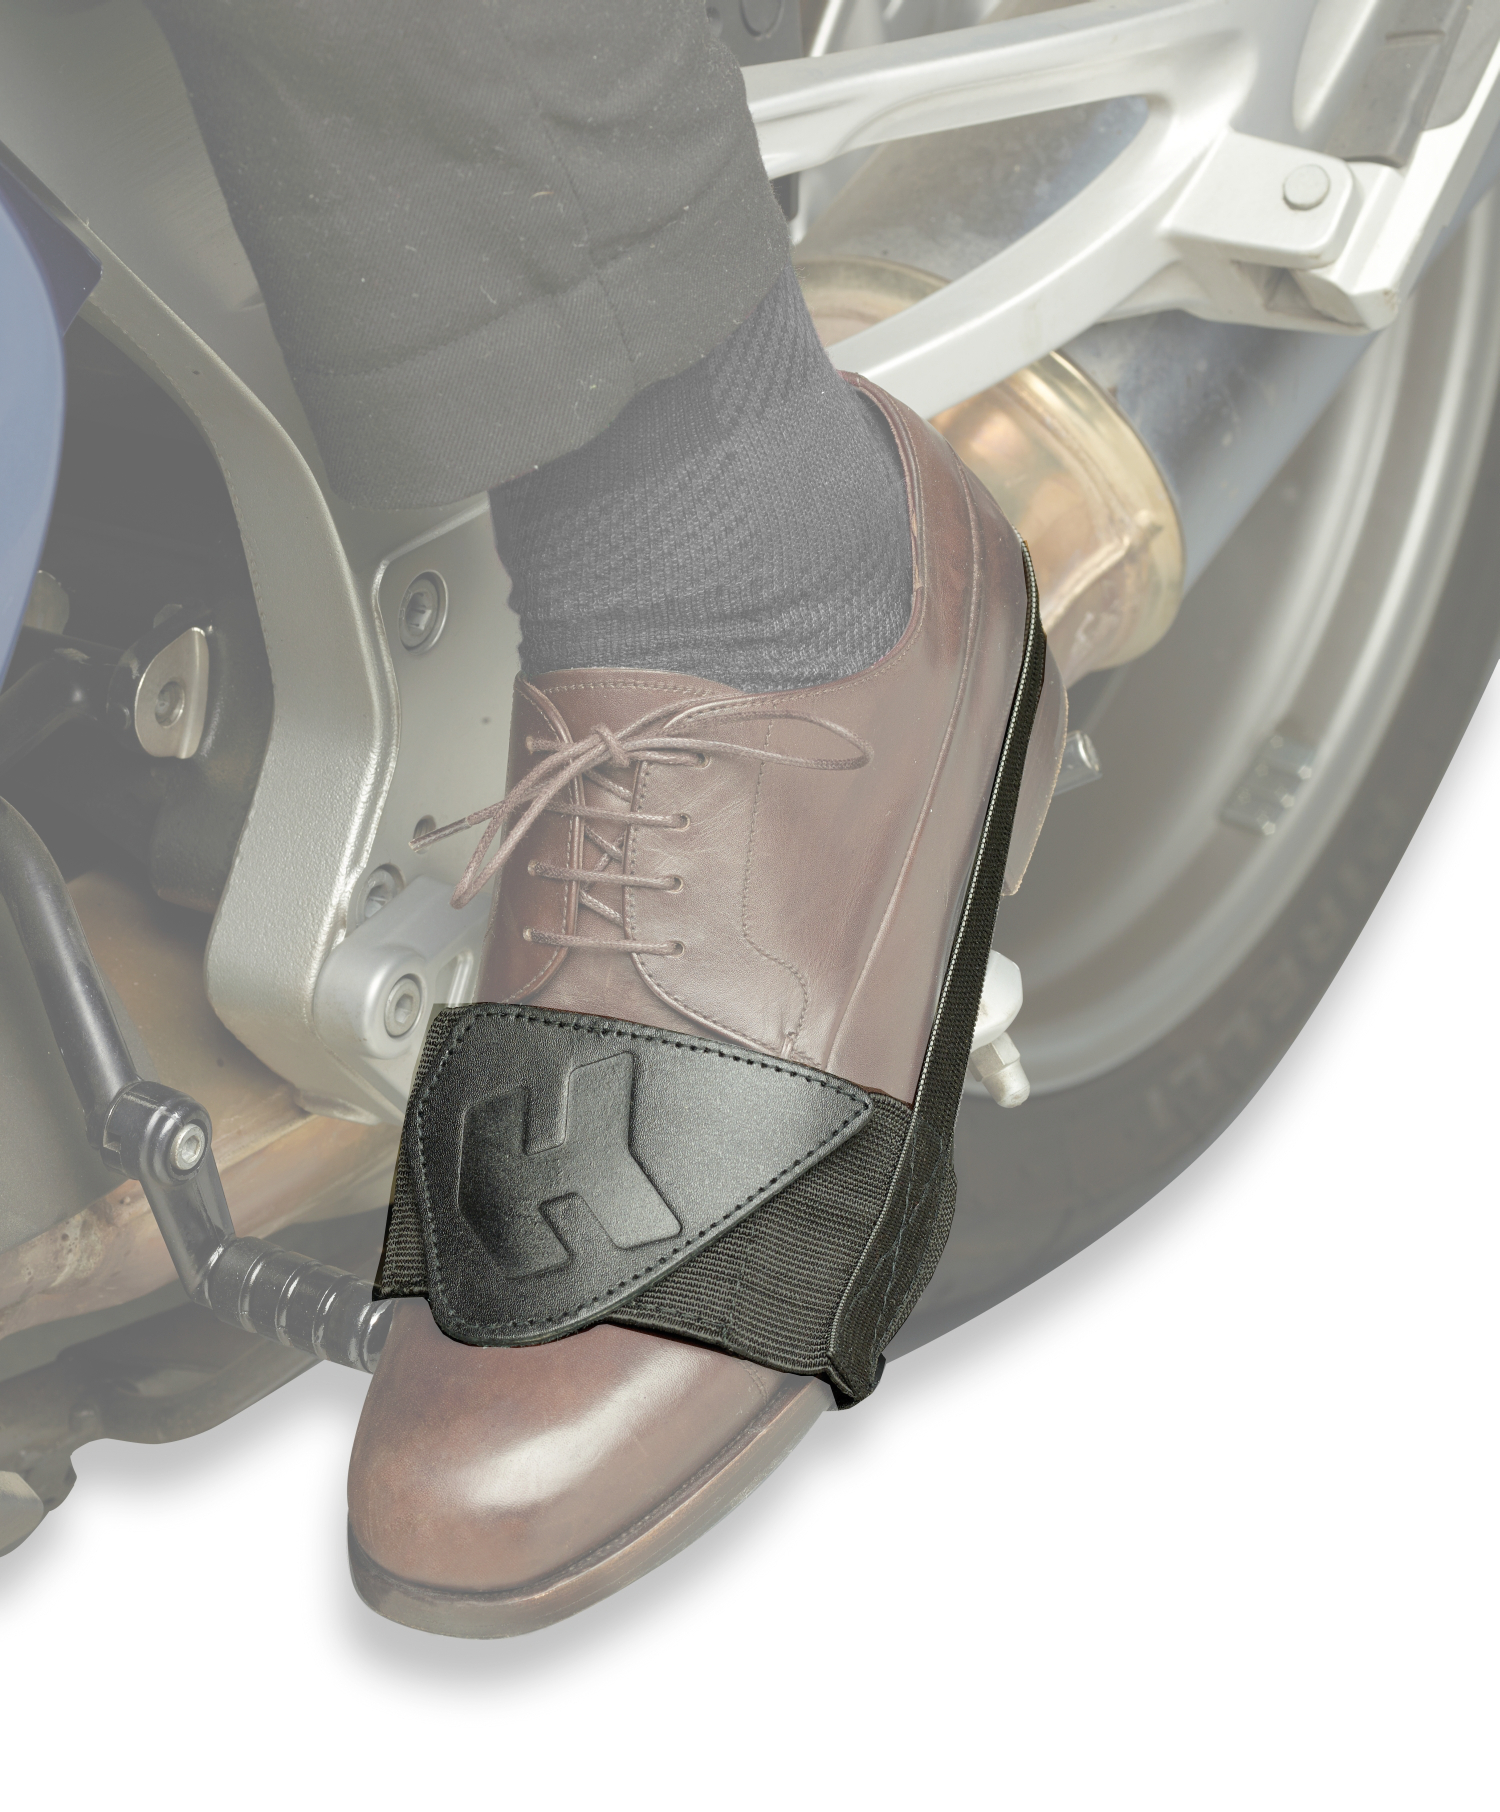 https://imageflow.rad.eu/1/7O8RyiNxqWO6M1fA03BK7x1X1/bottes-et-chaussures-moto-accessoires-hevik-protection-chaussure-noir.jpg